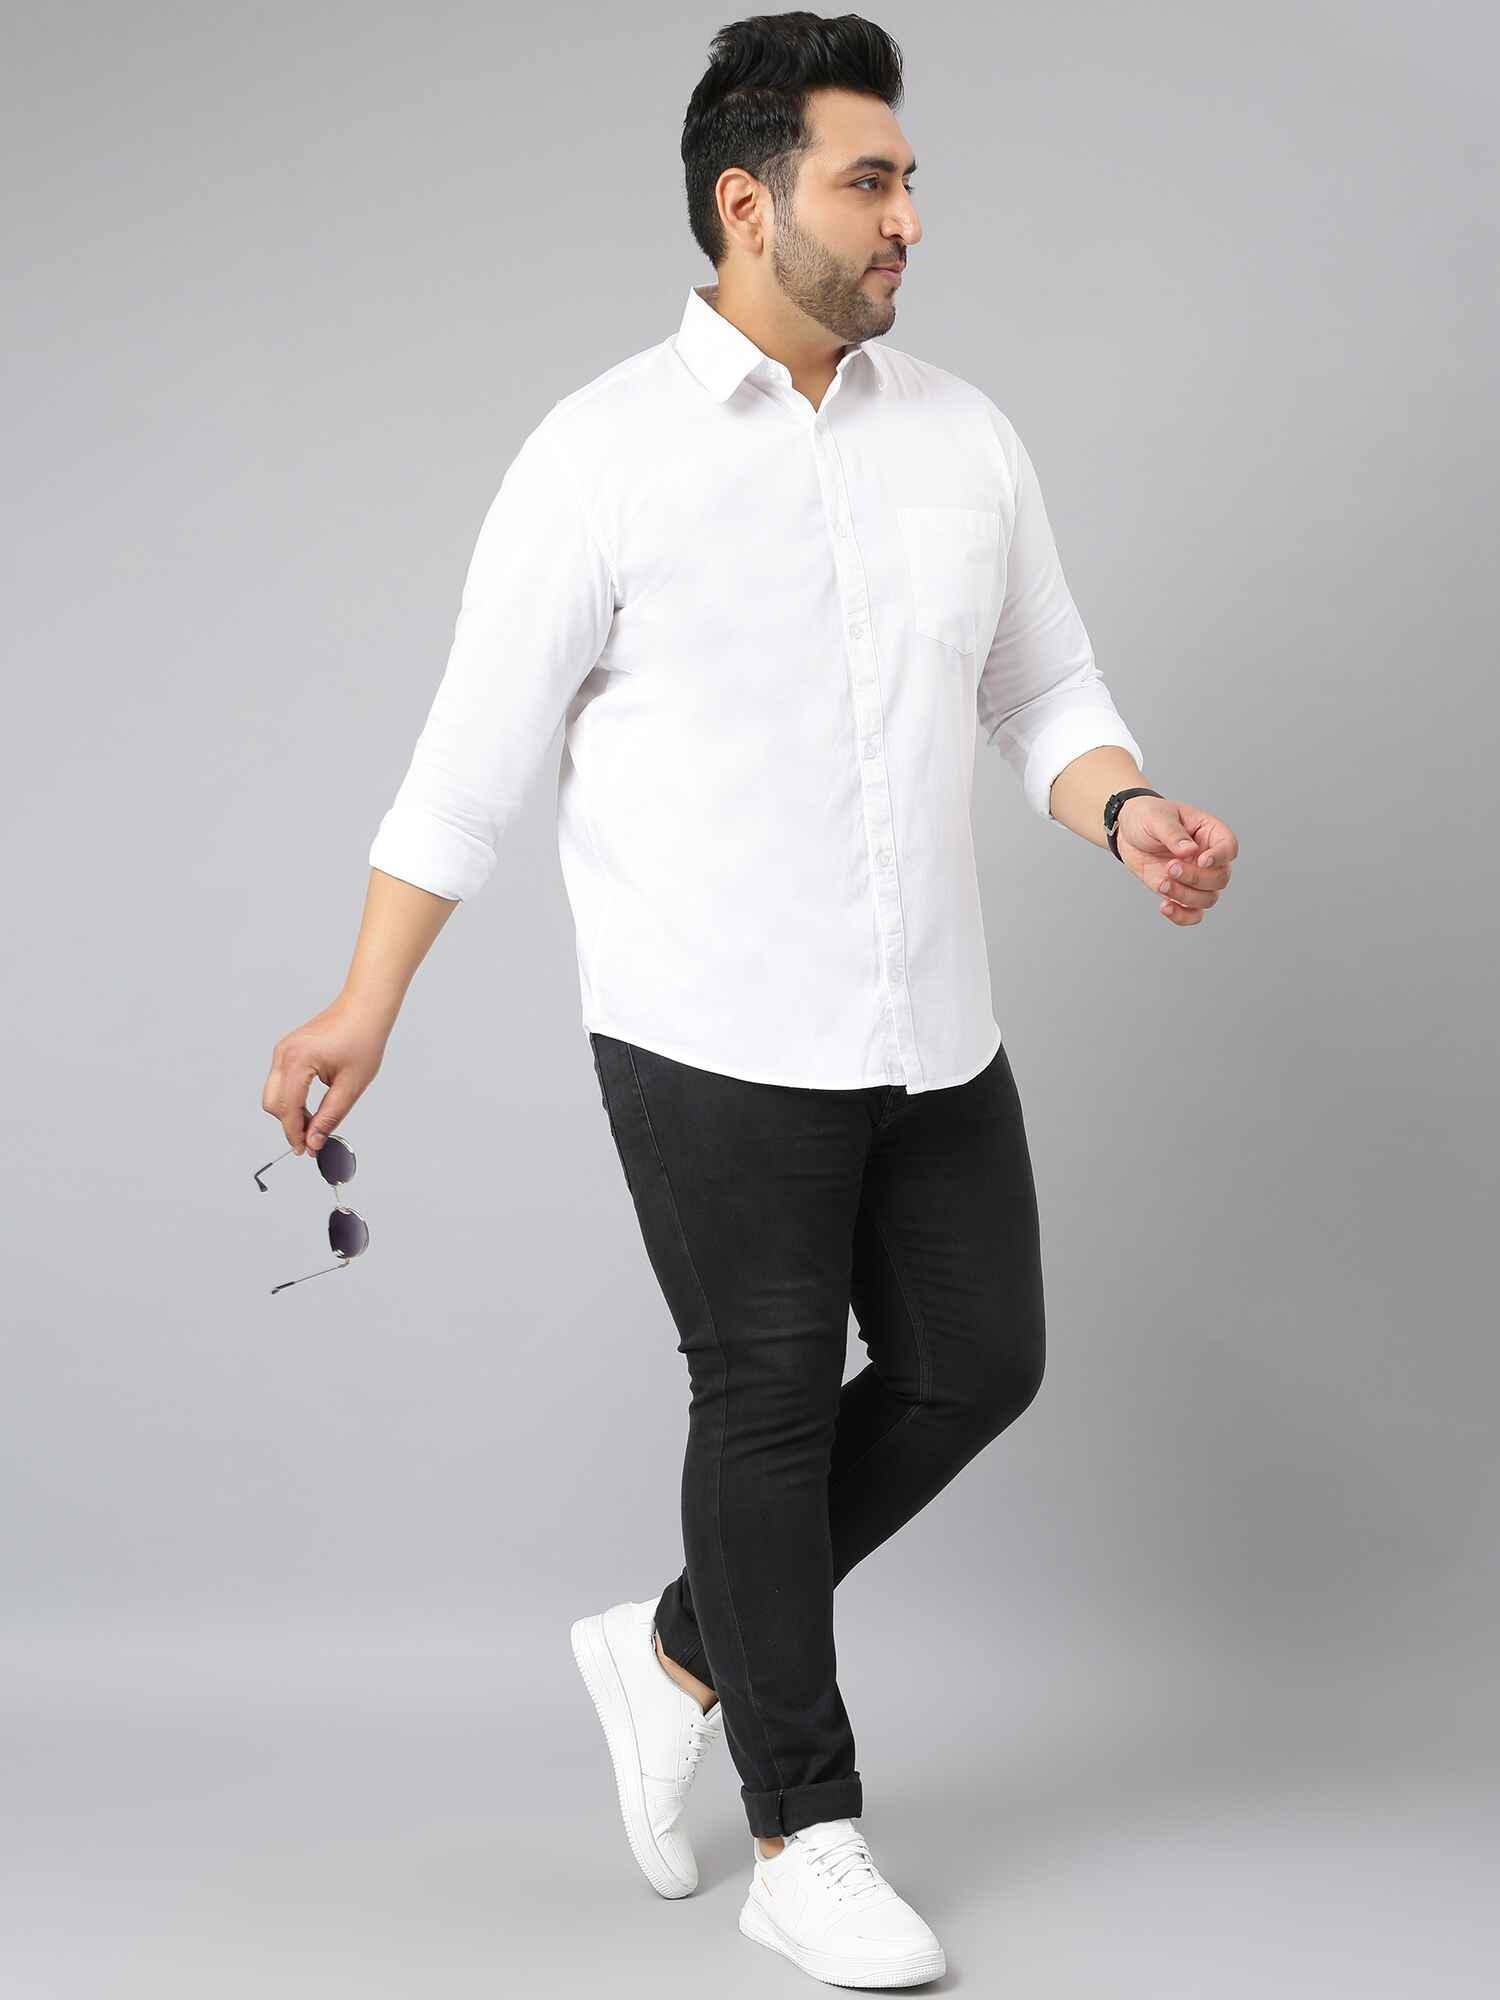 White Solid Stretchable Cotton Shirt Men's Plus Size - Guniaa Fashions